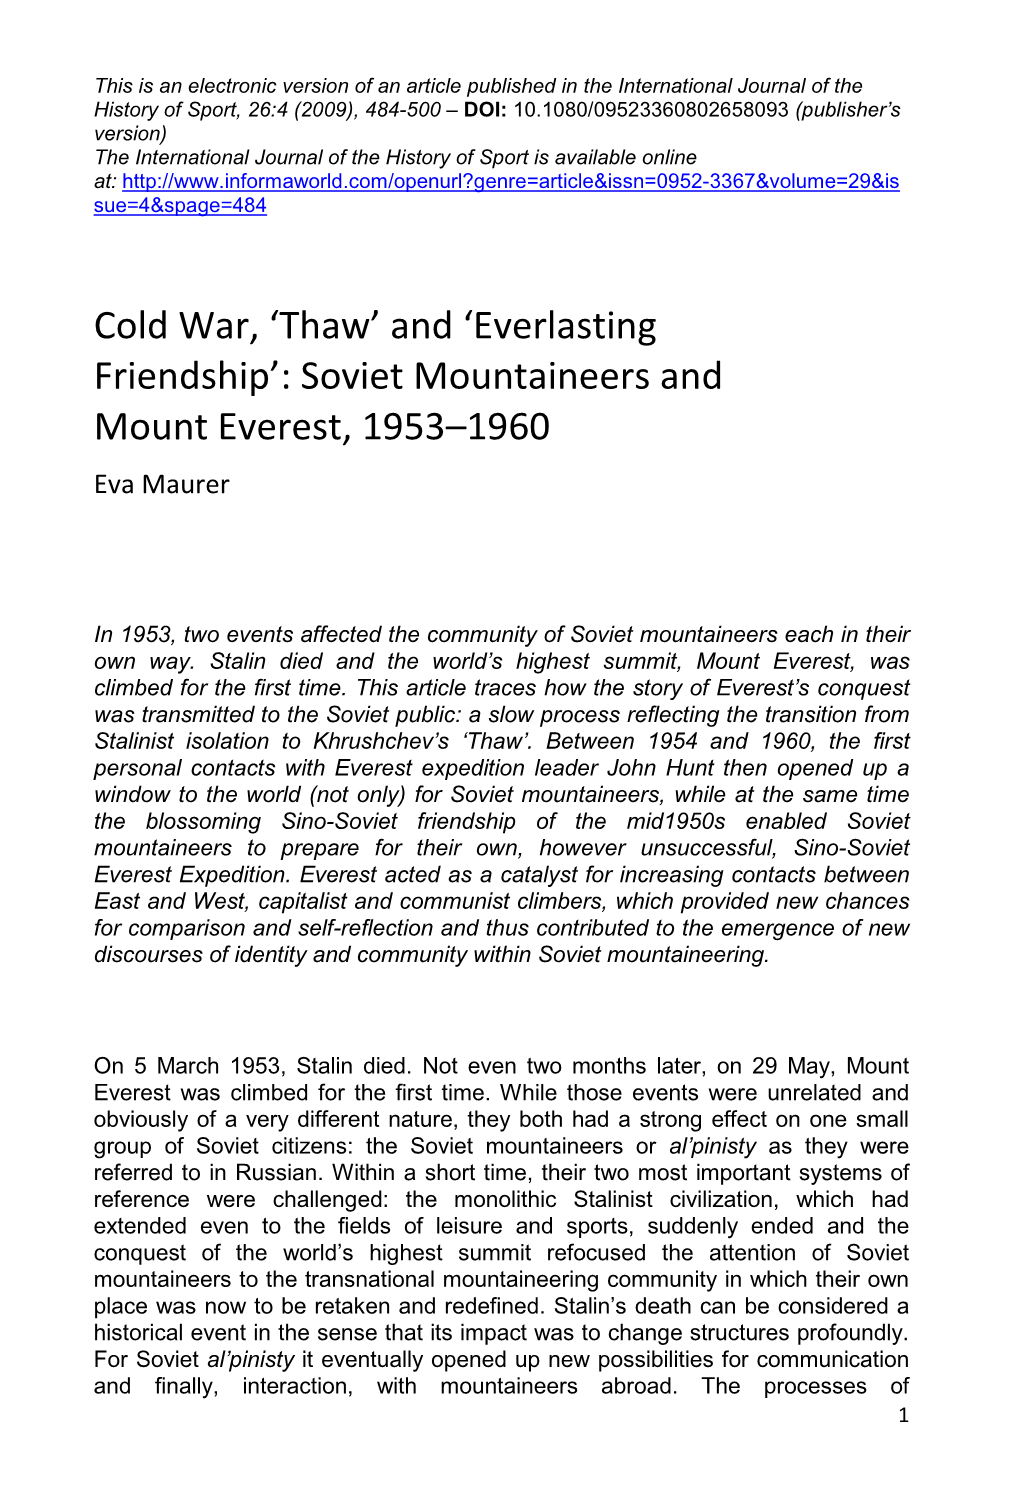 Soviet Mountaineers and Mount Everest, 1953–1960 Eva Maurer